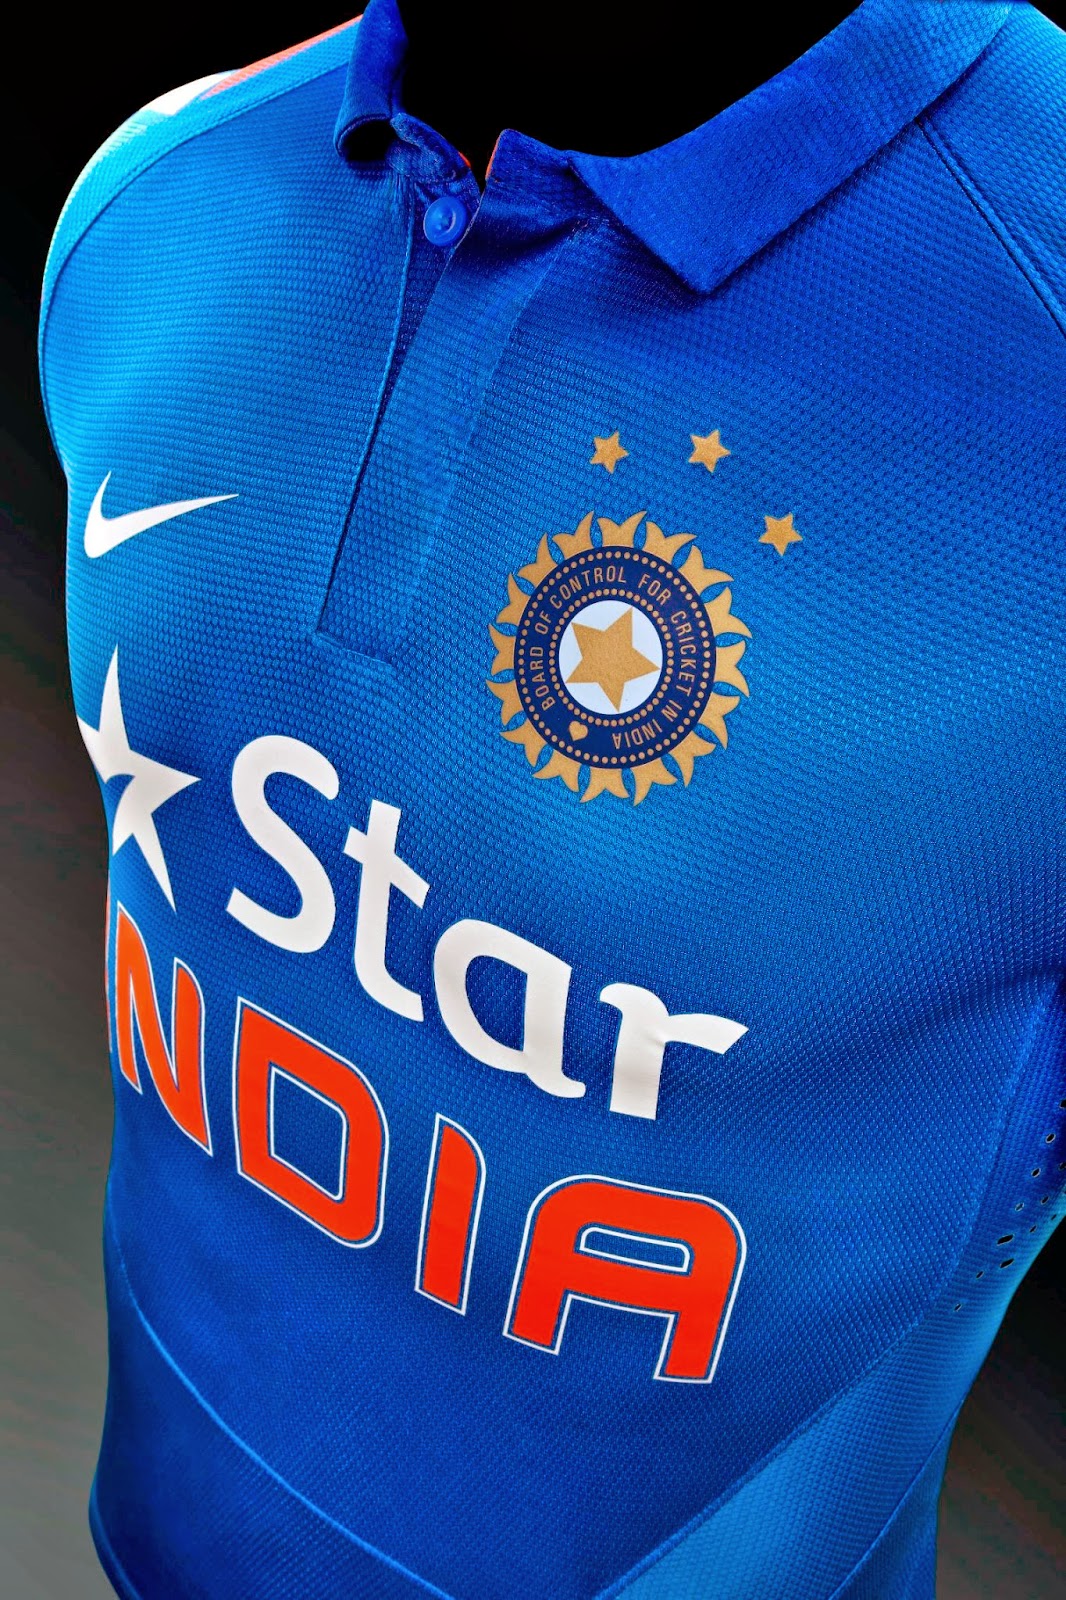 india cricket team new t20 jersey